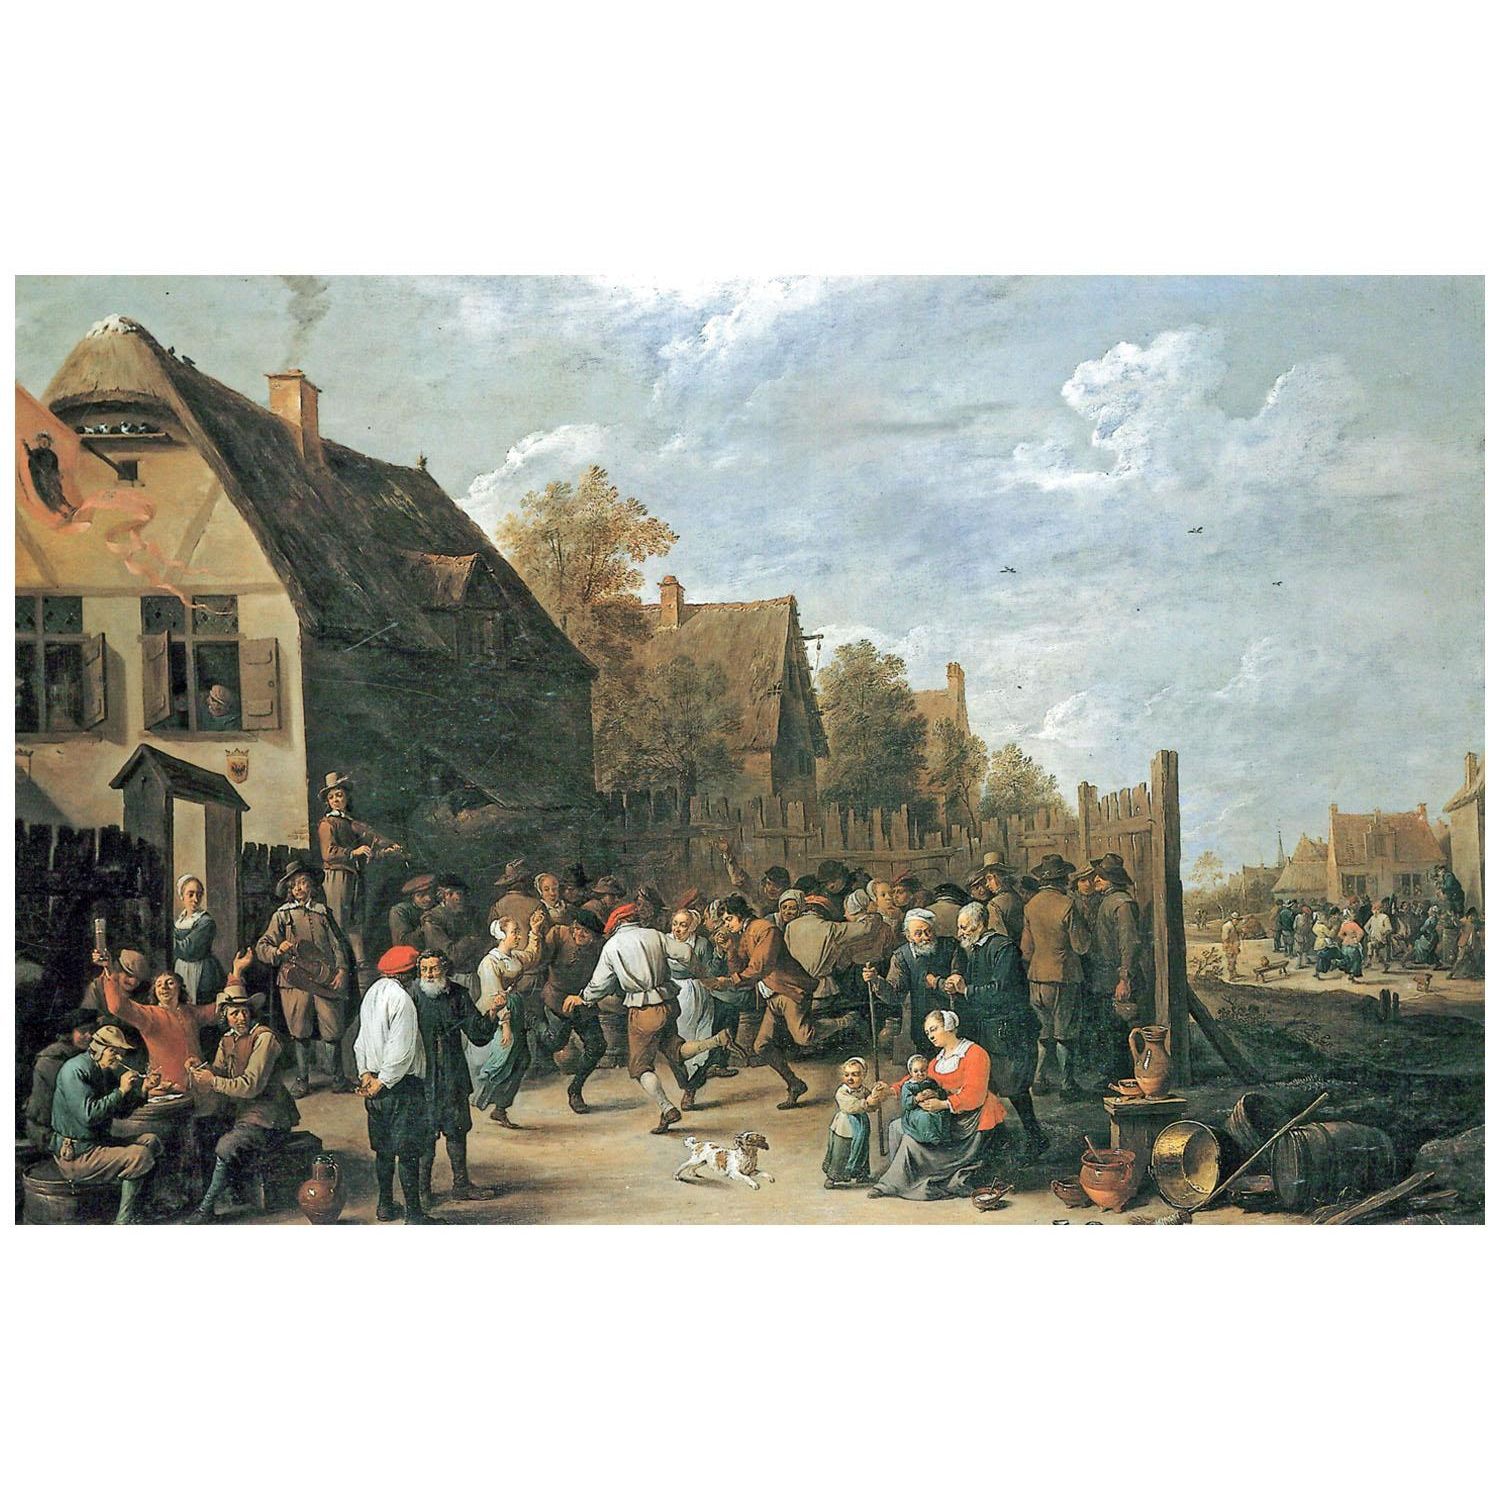 David Teniers II. Village Festival. 1645. Kunsthalle Karlsruhe